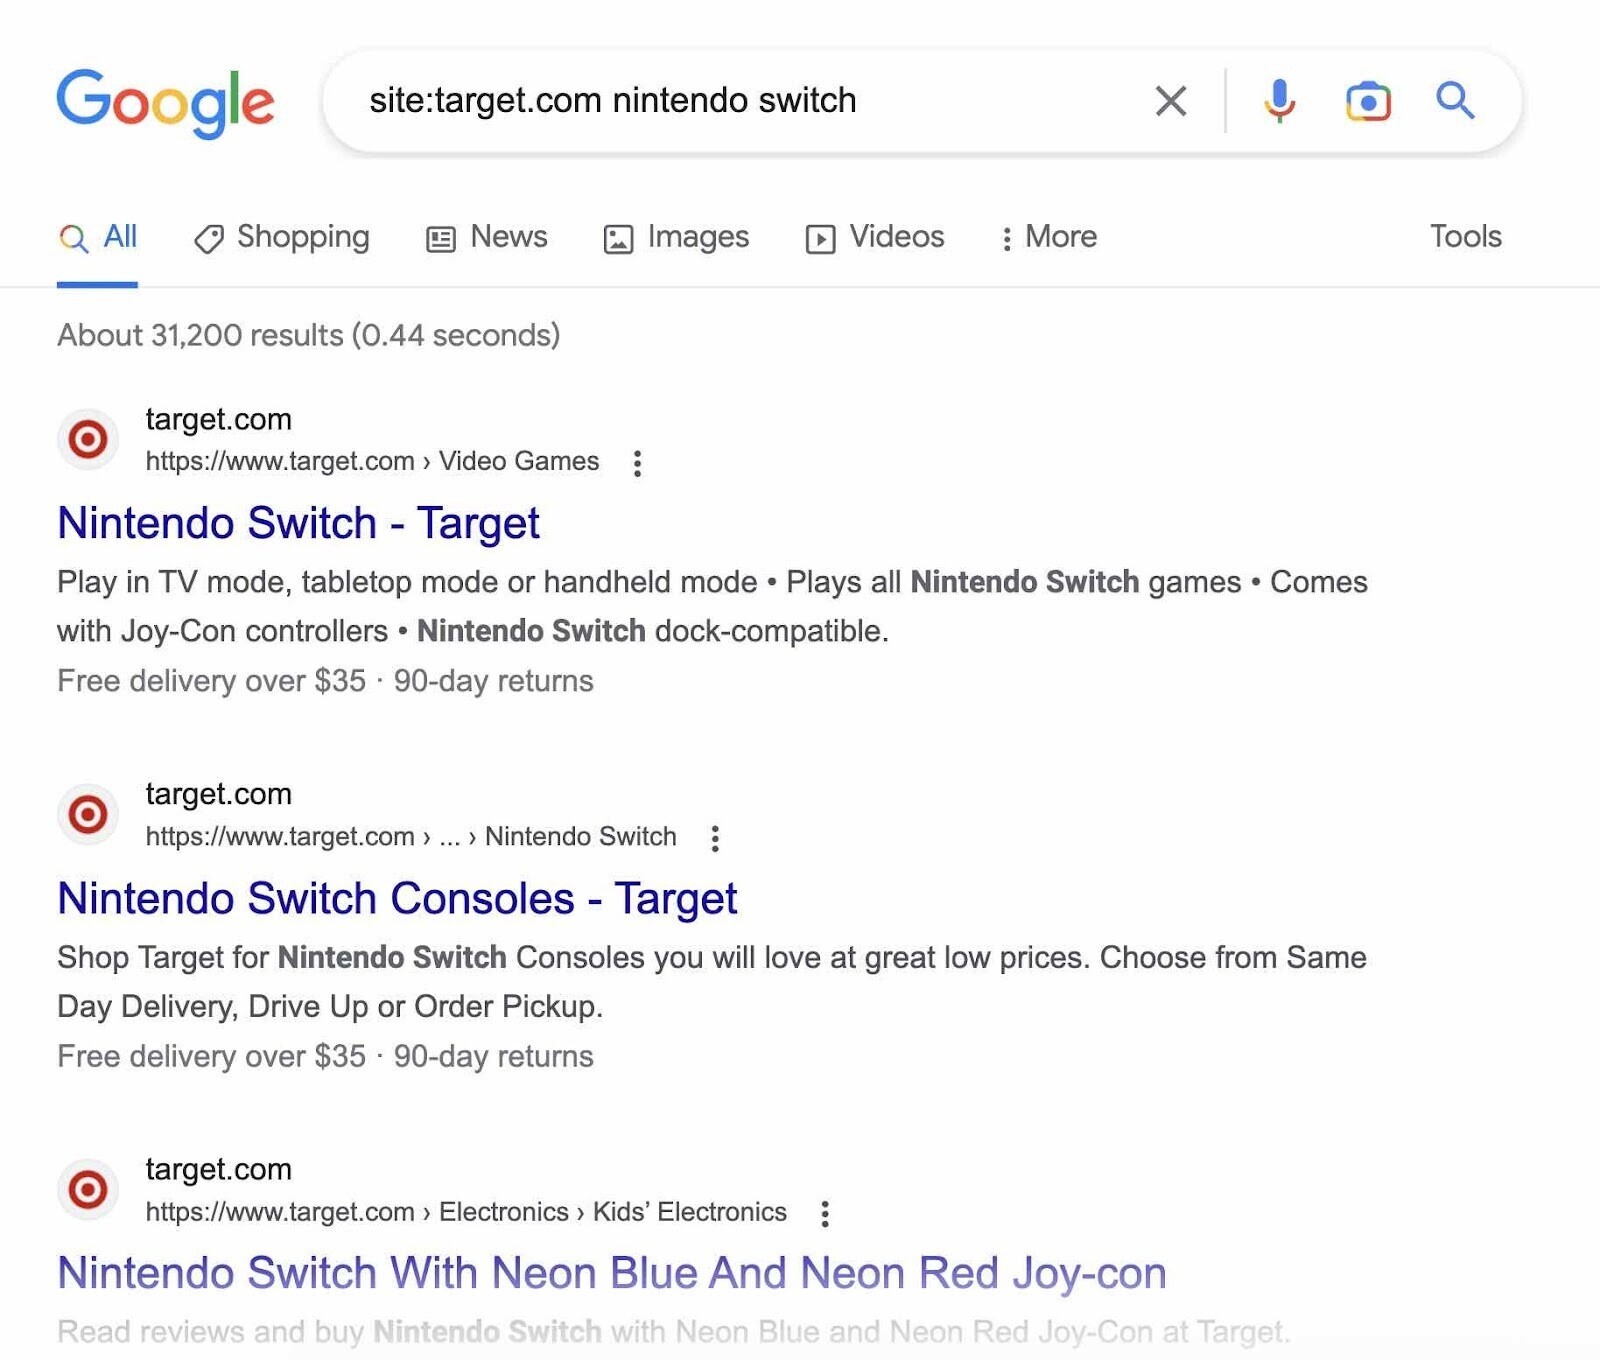 site:target.com nitendo switch results